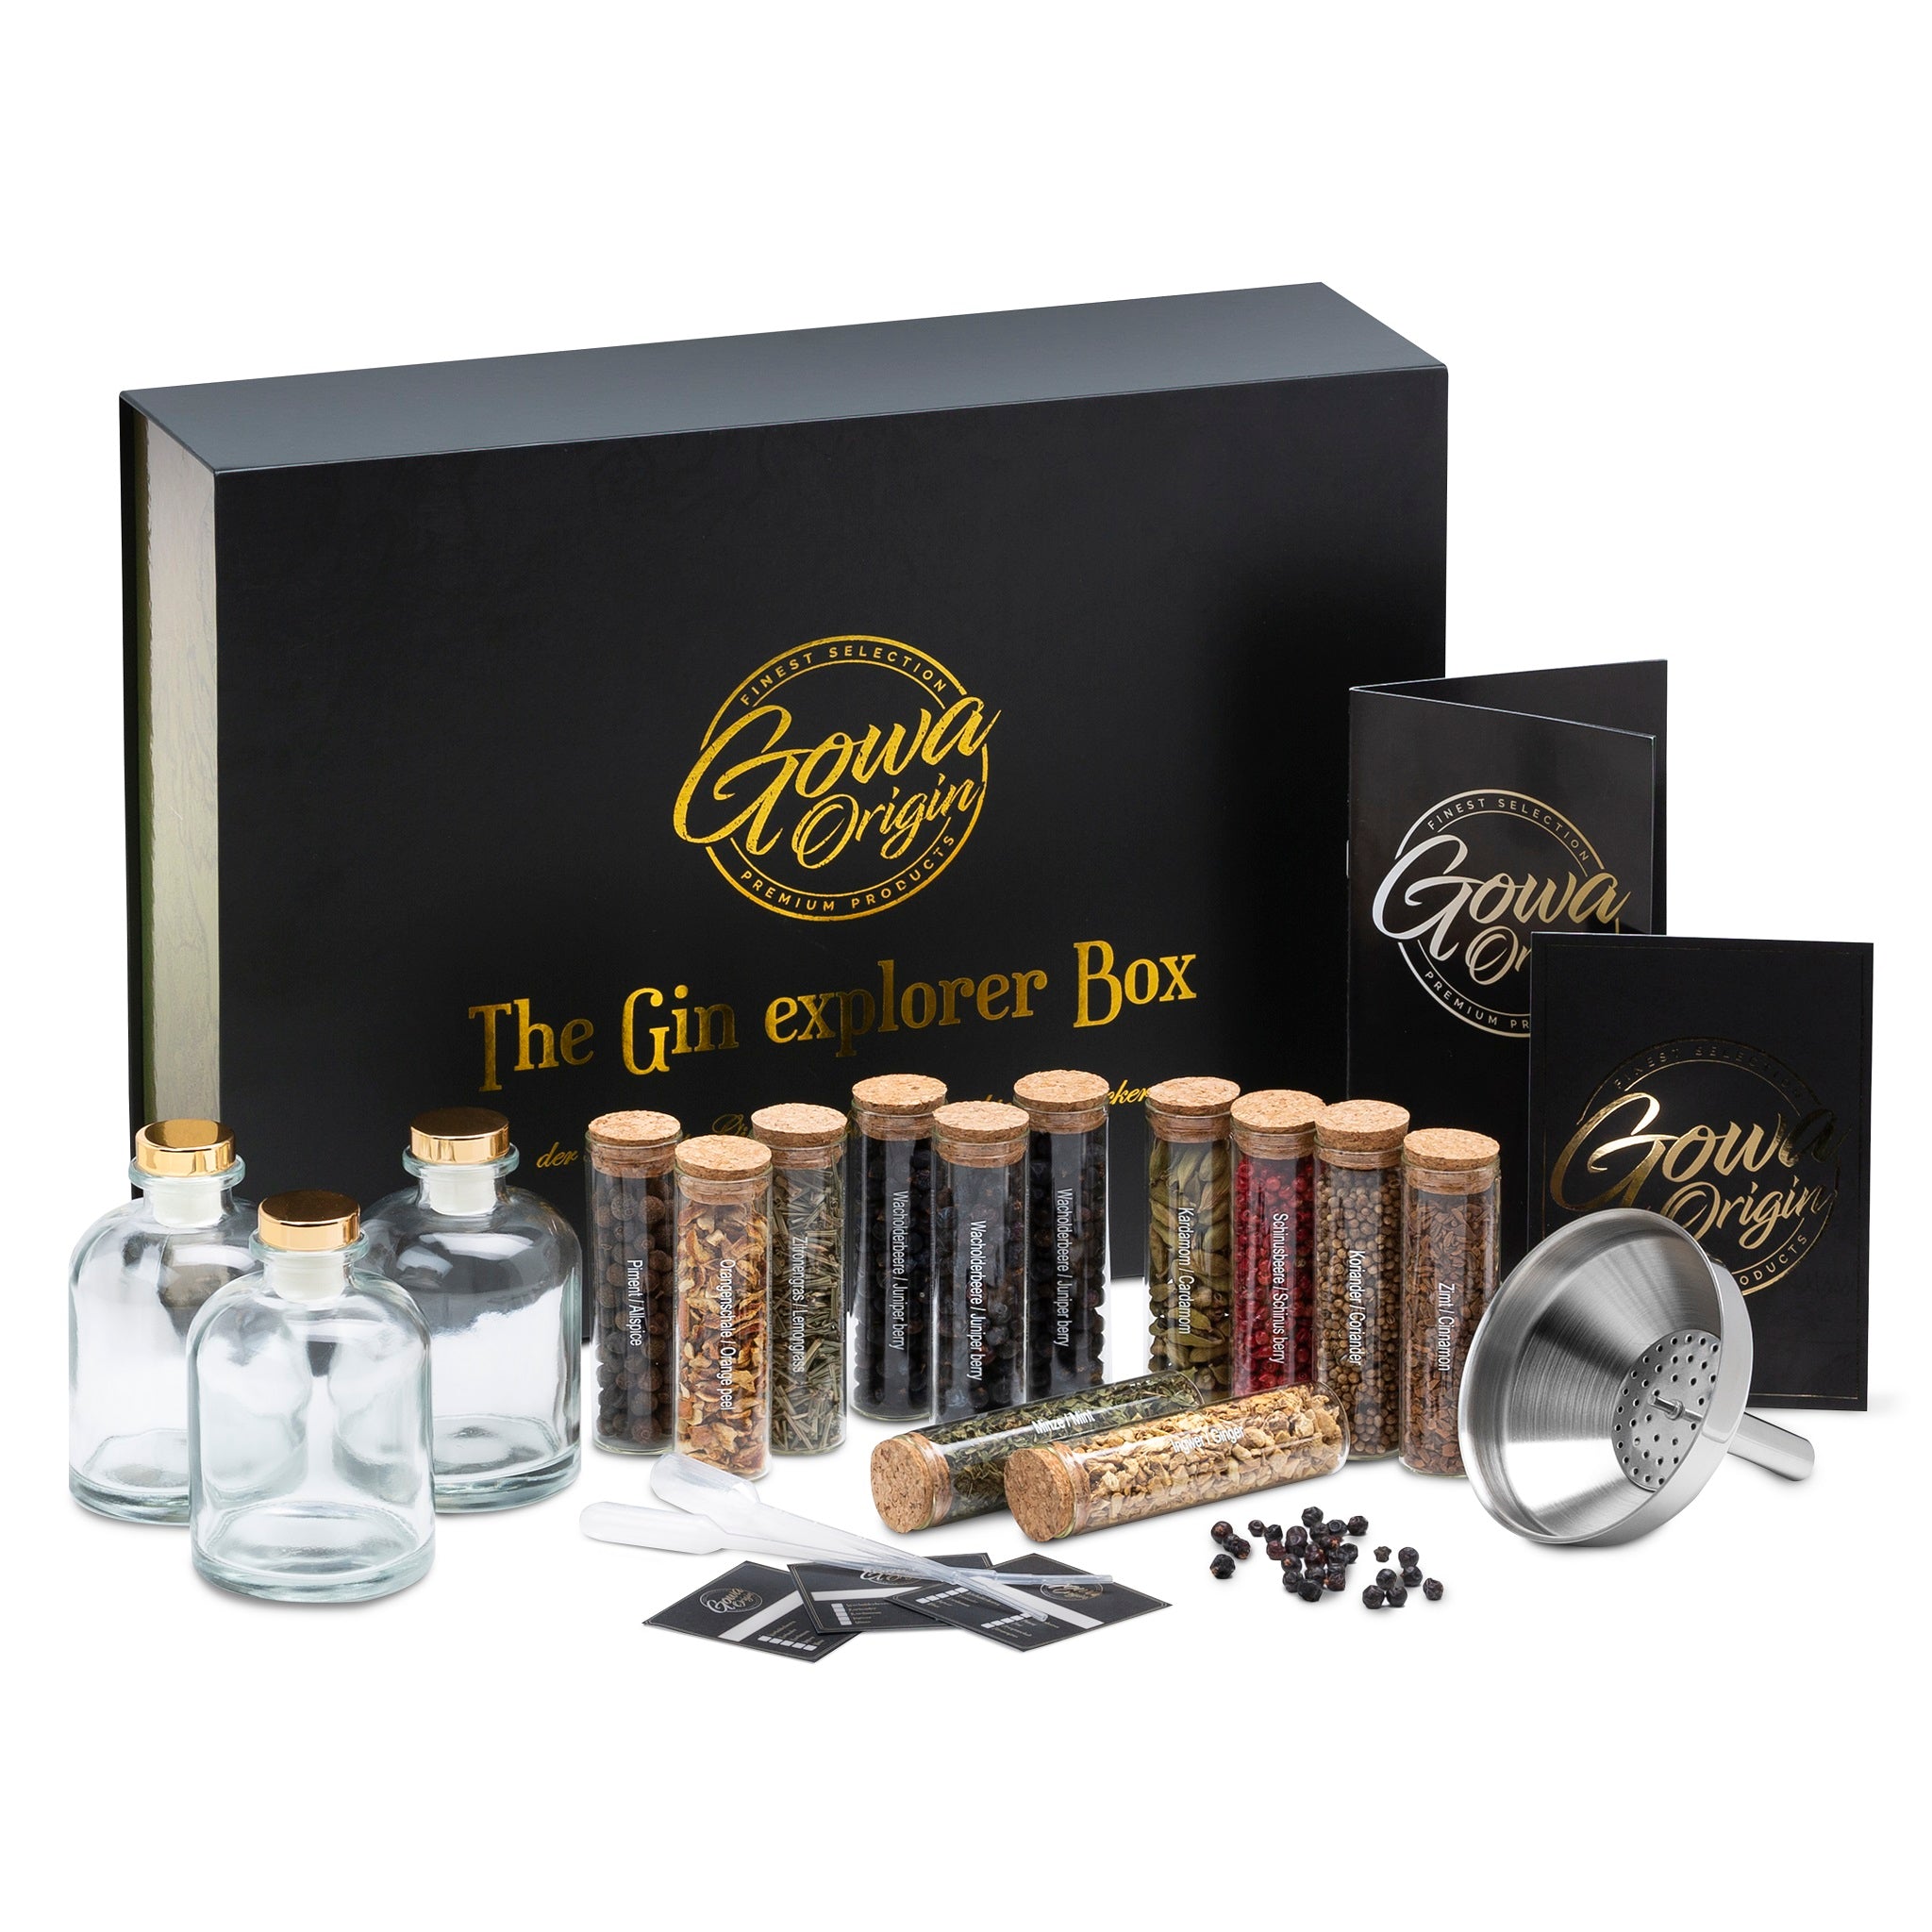 The Gin Explorer Box - DIY Gin Kit